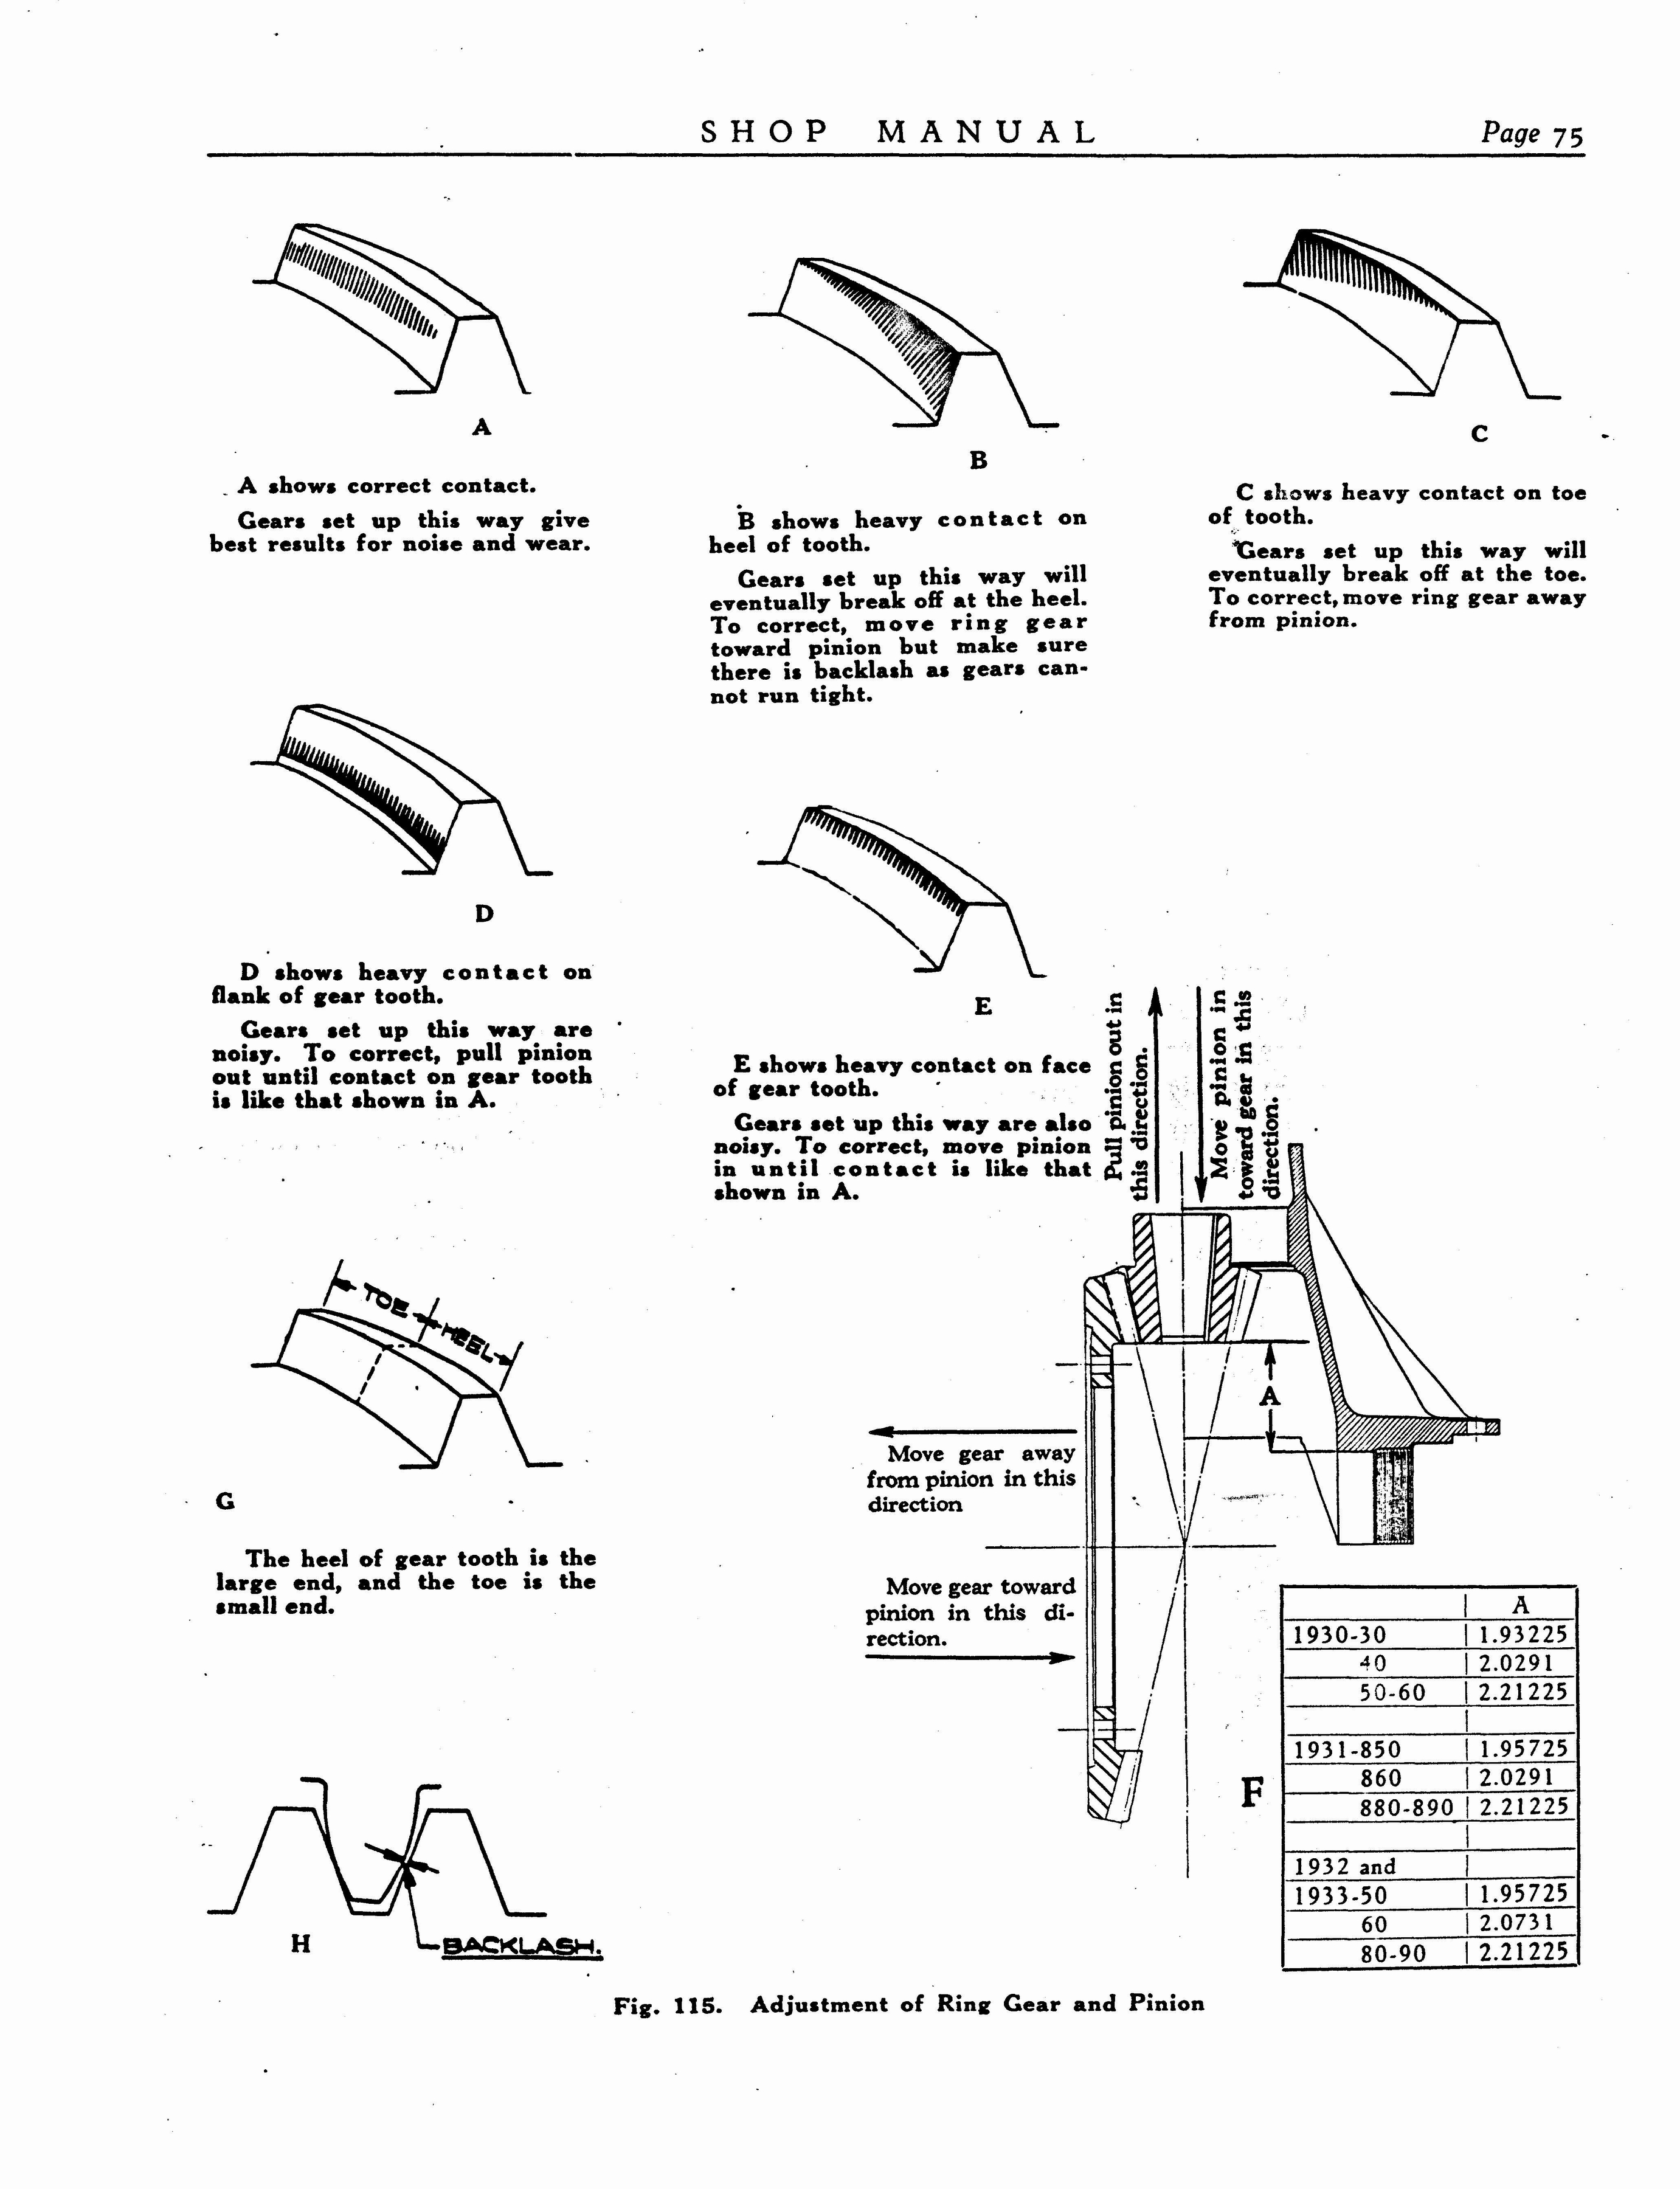 n_1933 Buick Shop Manual_Page_076.jpg